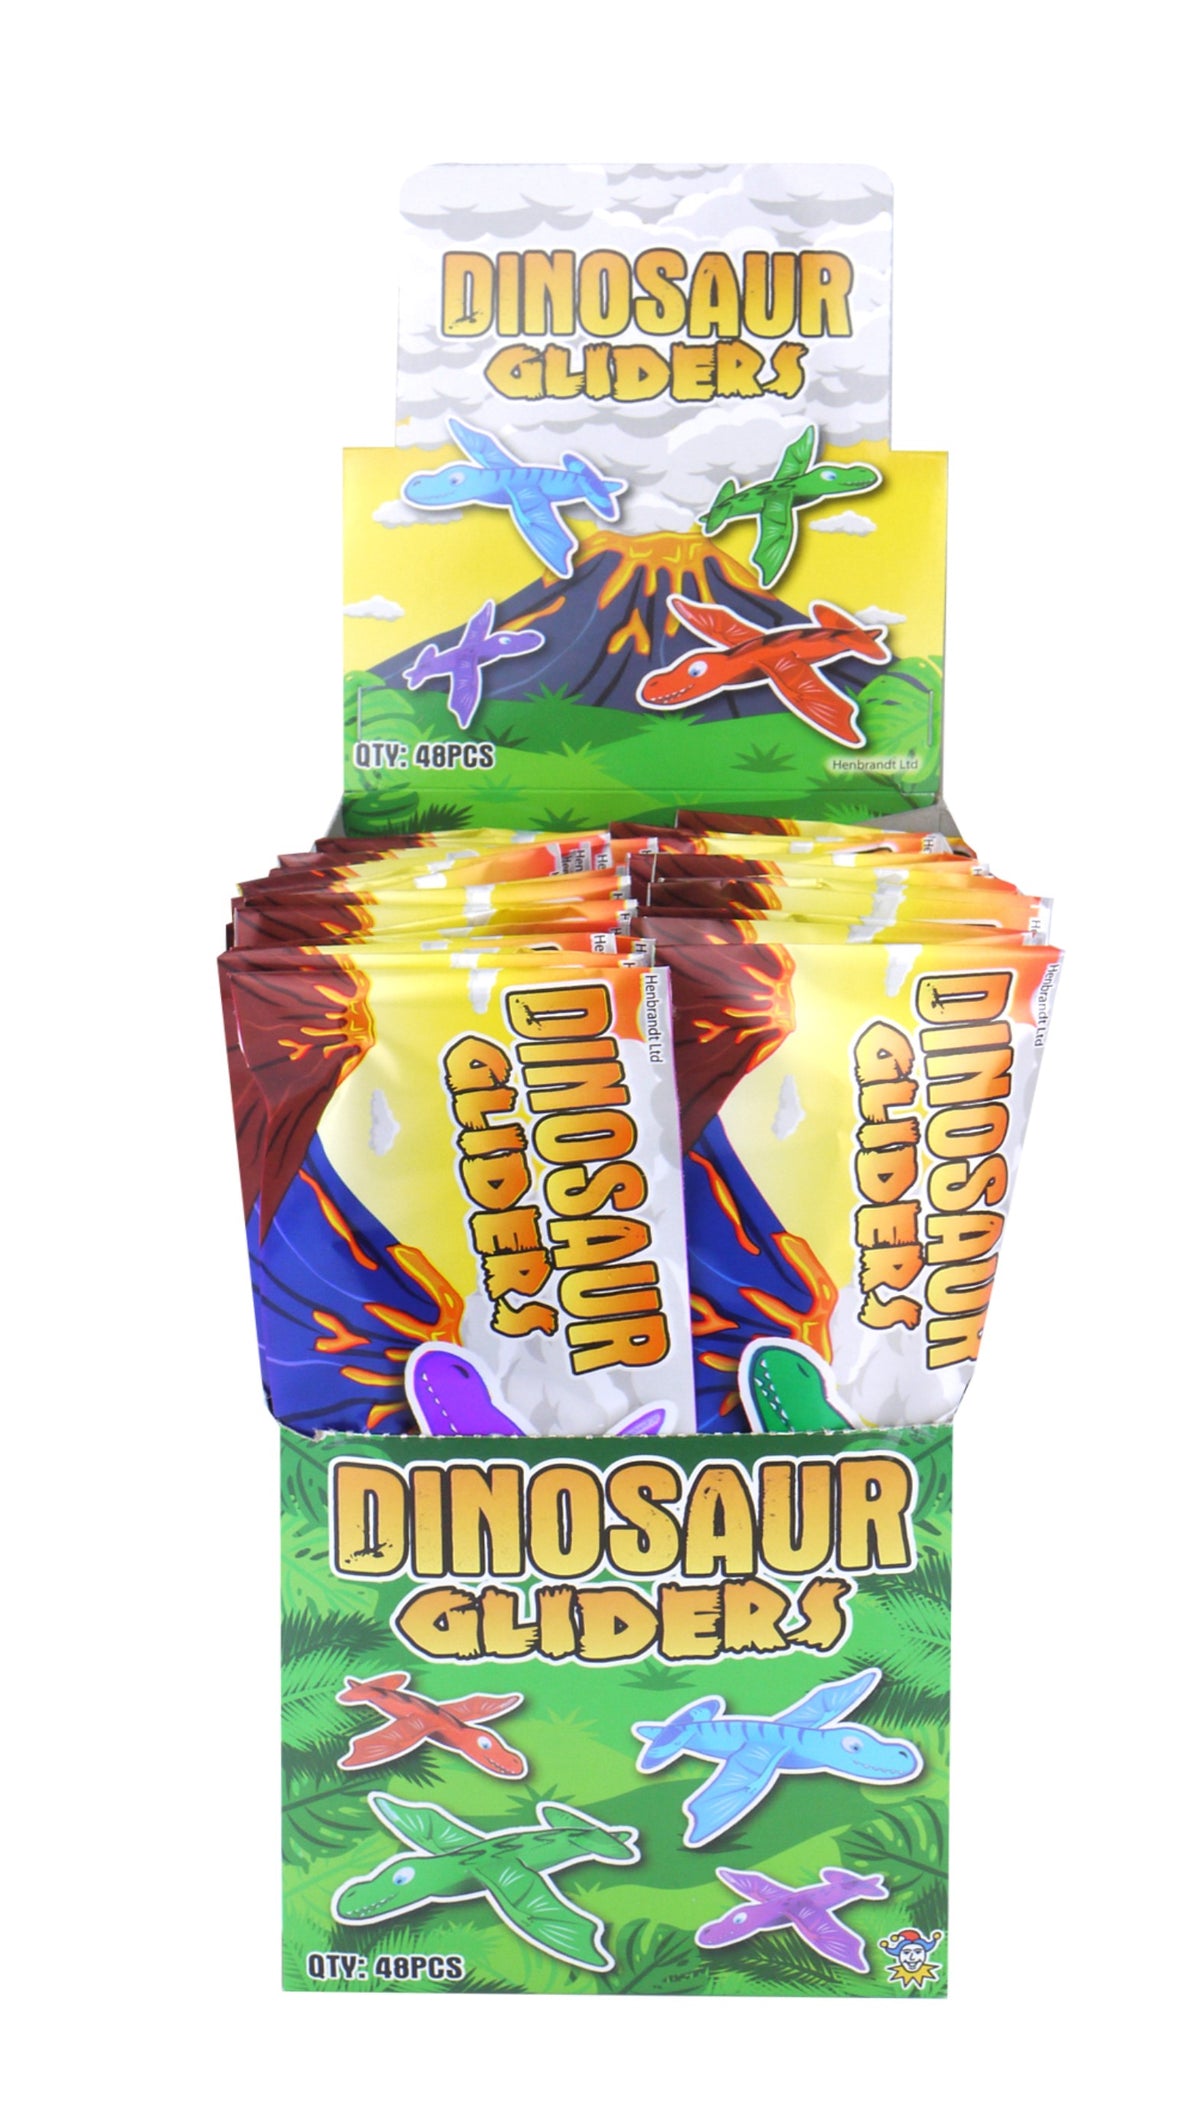 HENBRANDT Dinosaur CHILDRENS FLYING GLIDERS Kids Toys Party Bag Fillers Assorted